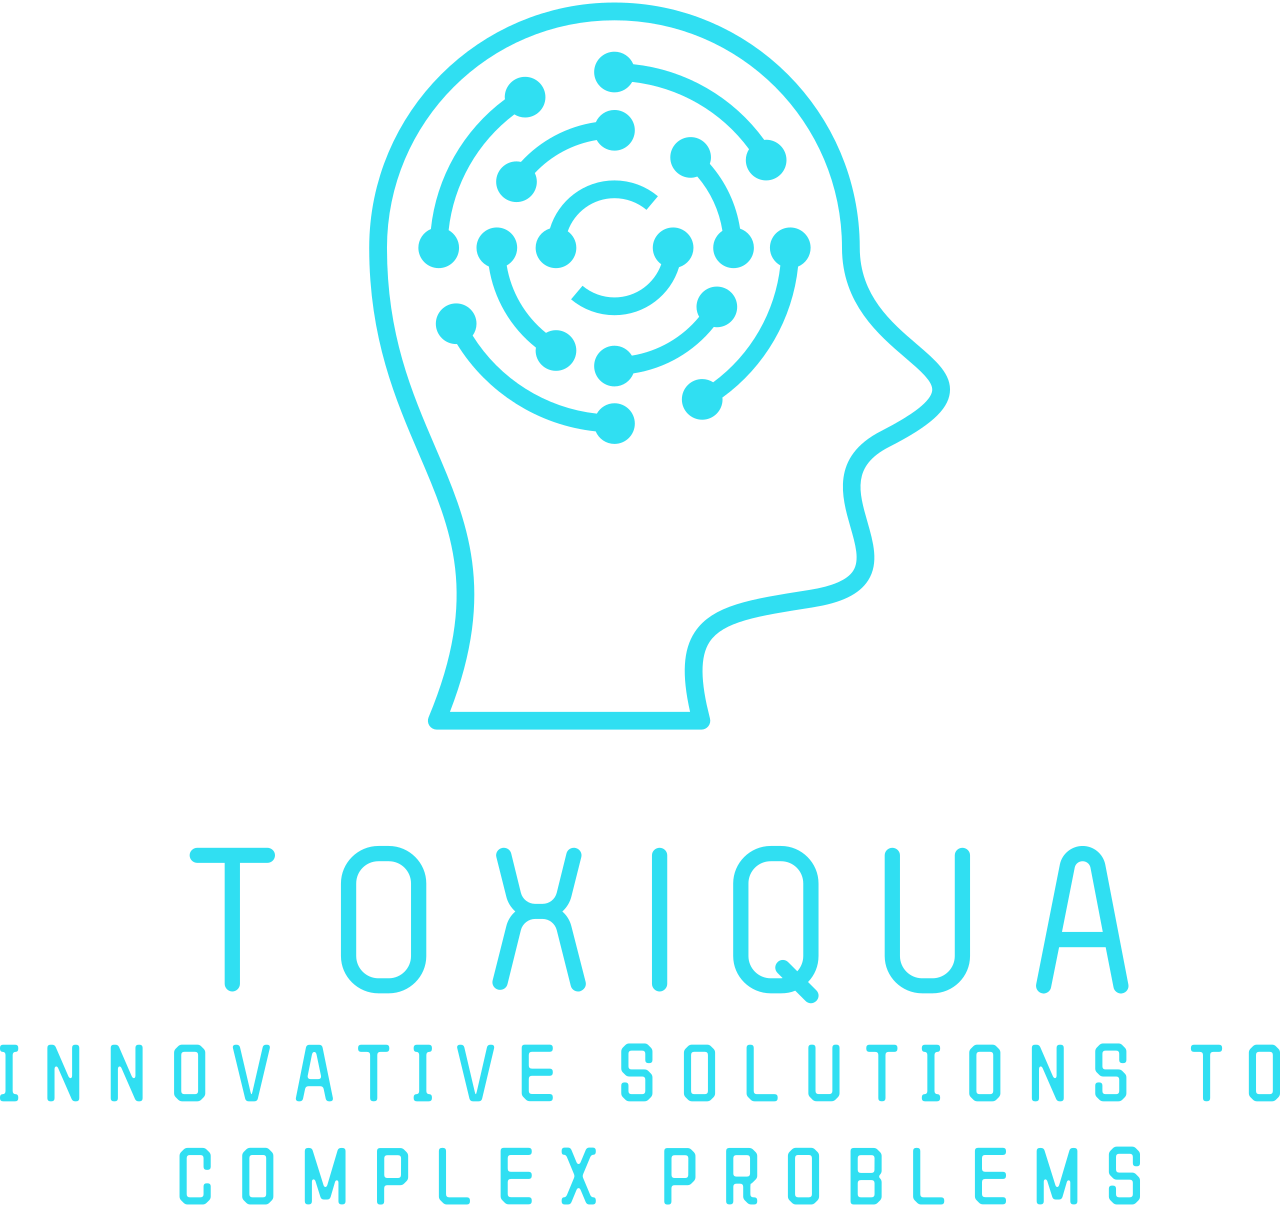 Toxiqua's logo